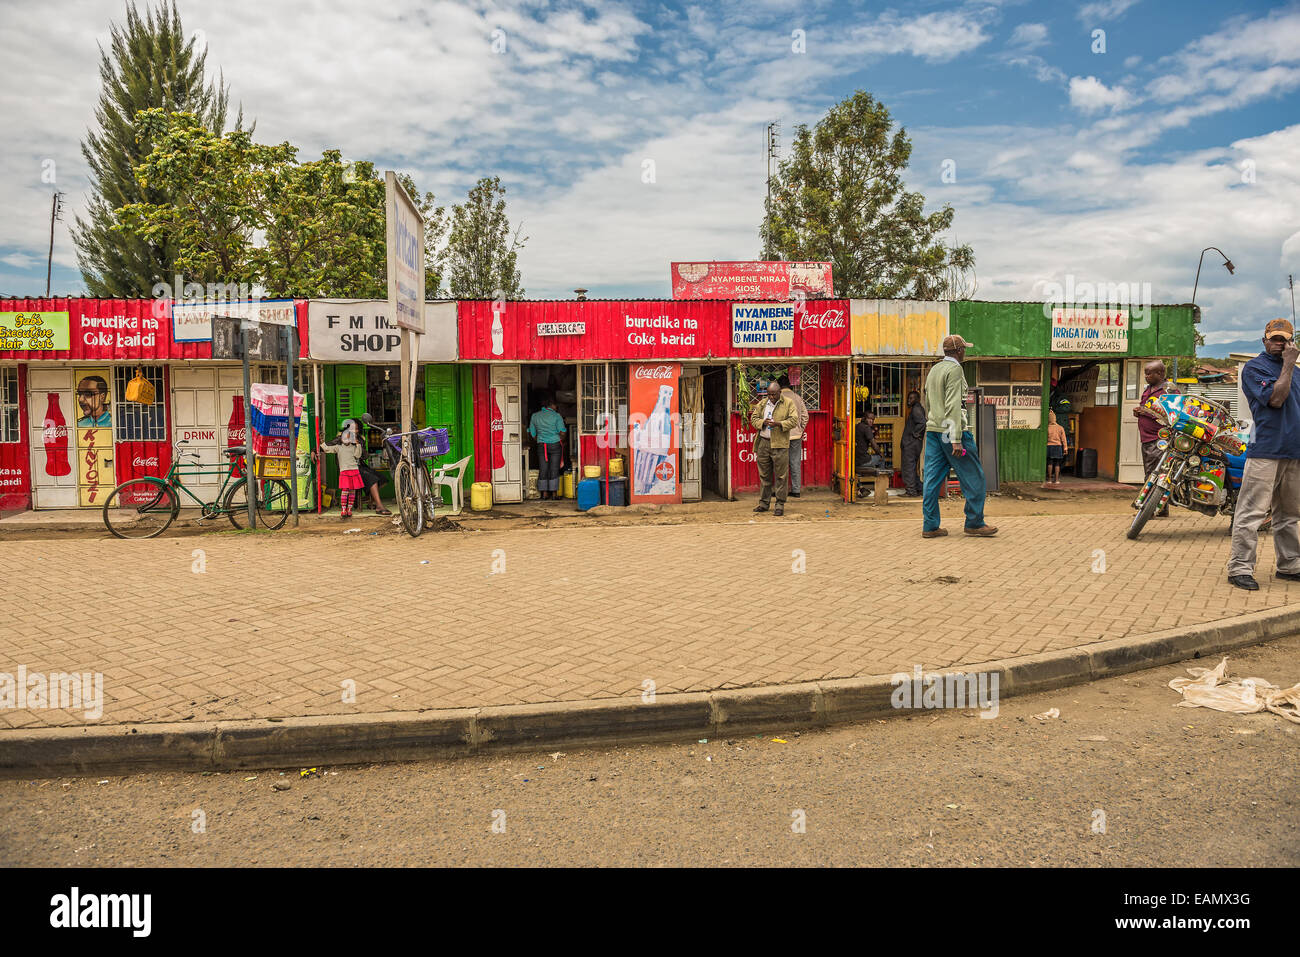 Typical shopping street scene with pedestrians in Naivasha, Kenya Stock Photo